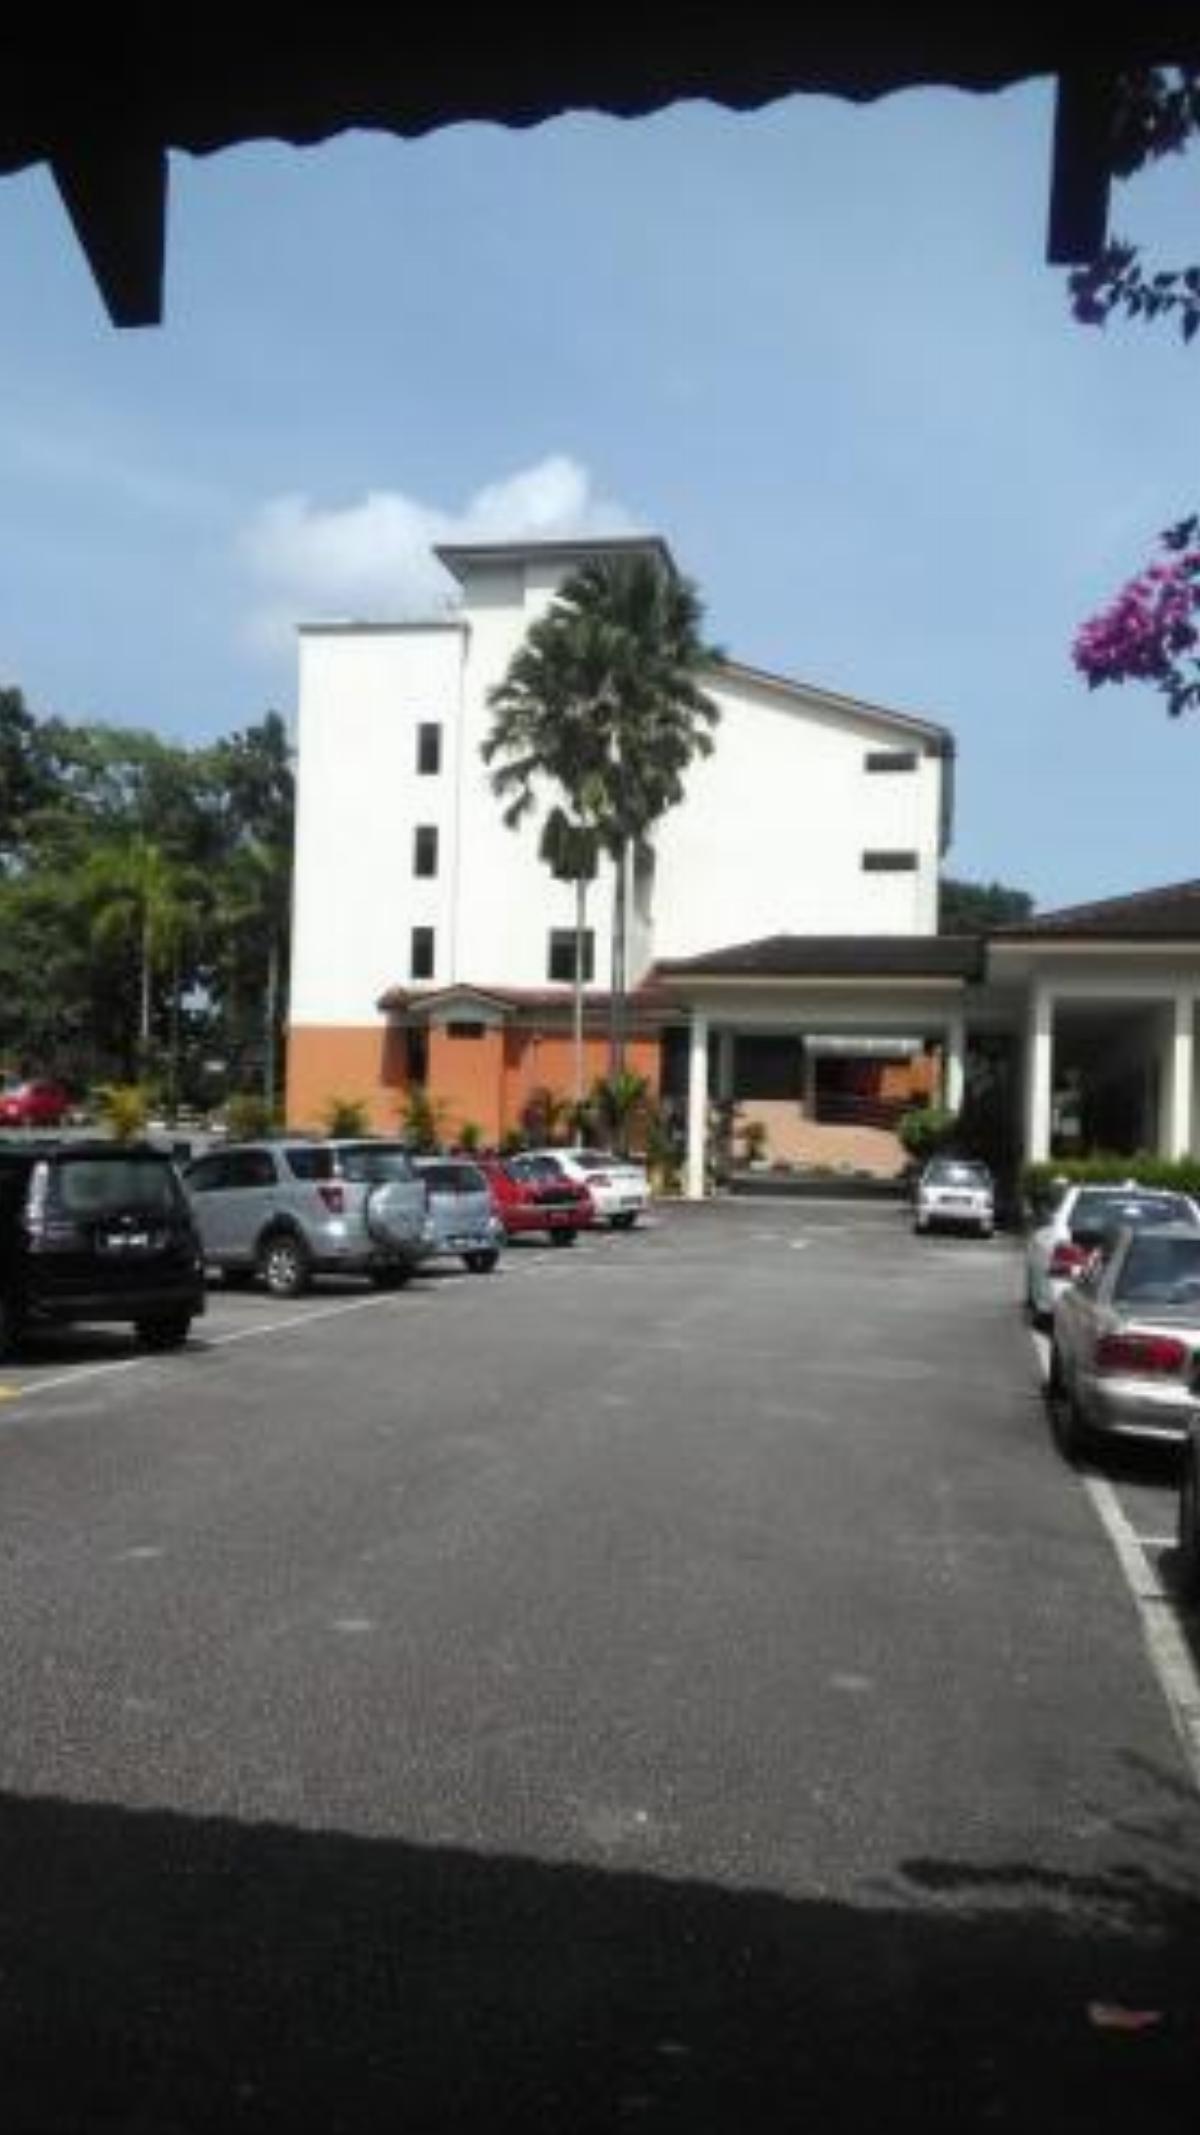 taiping golf resort Hotel Kamunting Malaysia